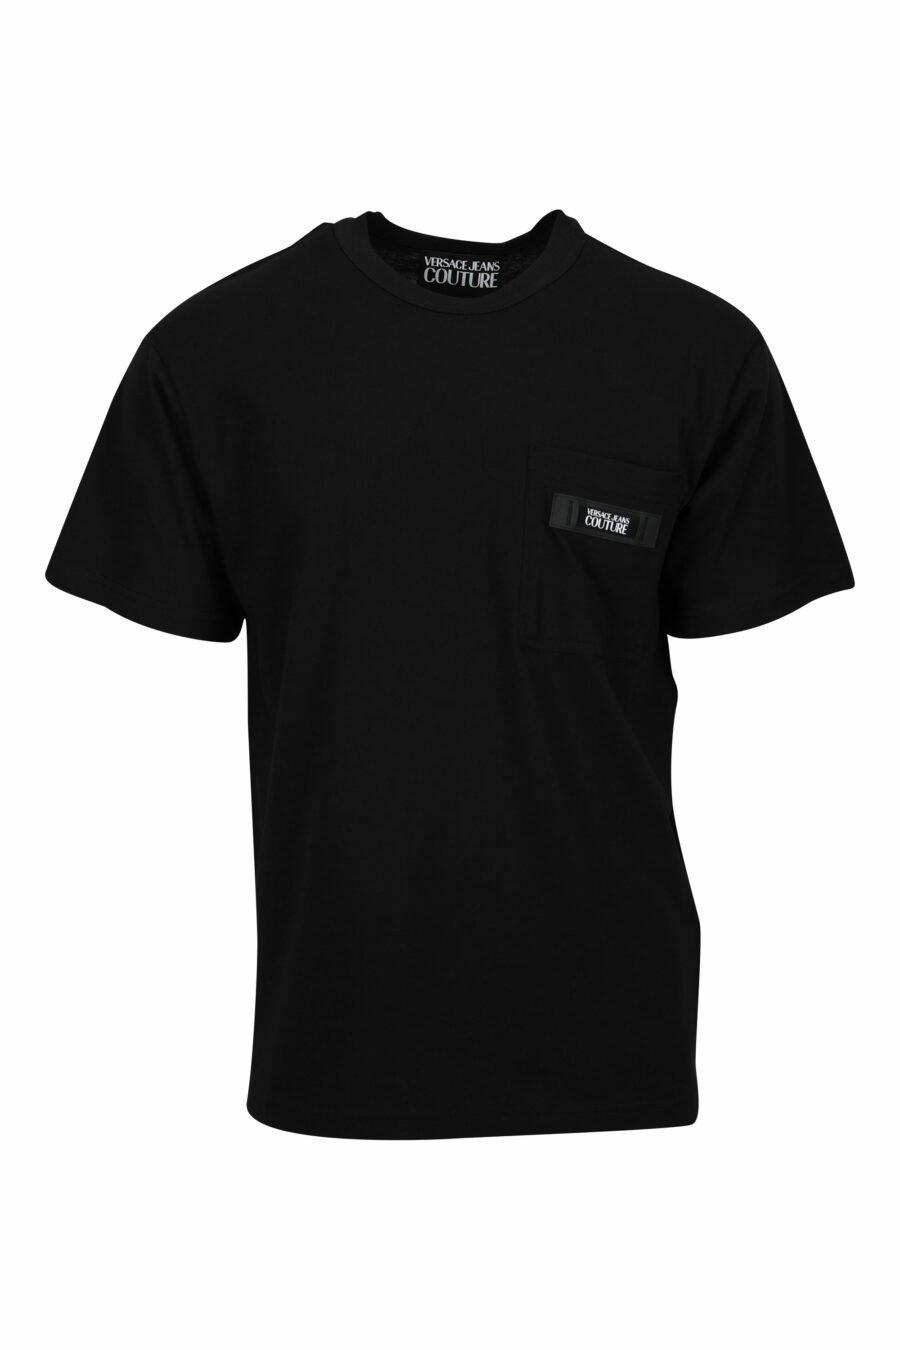 Camiseta negra con minilogo etiqueta - 8052019599626